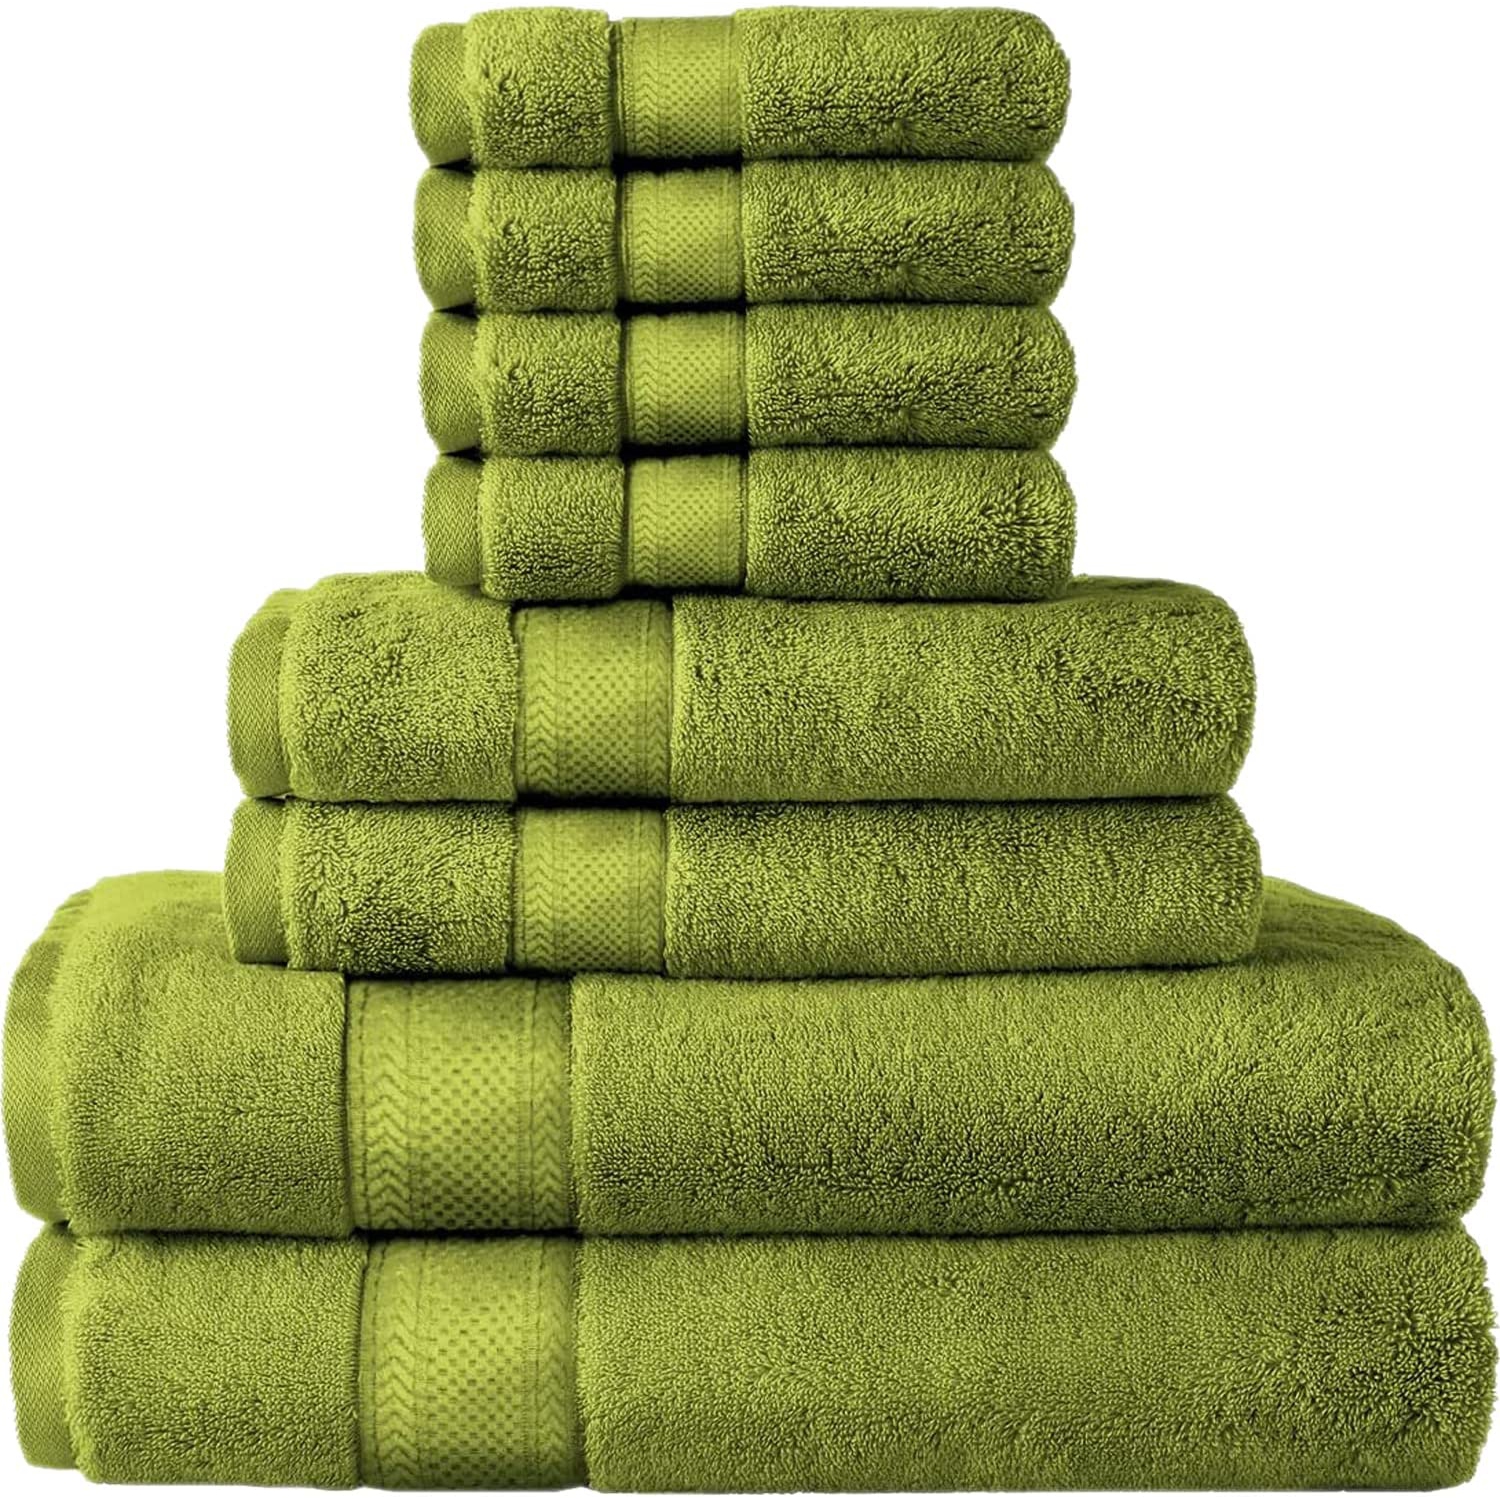 Canadian Linen Luxury Green Color Bathroom Towel Set 8 Pack, 2 Bath Towels 27"x54" 600 GSM, 2 Hand Towels 16"x27", 4 Wash Cloths 12"x12" Soft Absorbent Aegean Turkish Cotton Towels